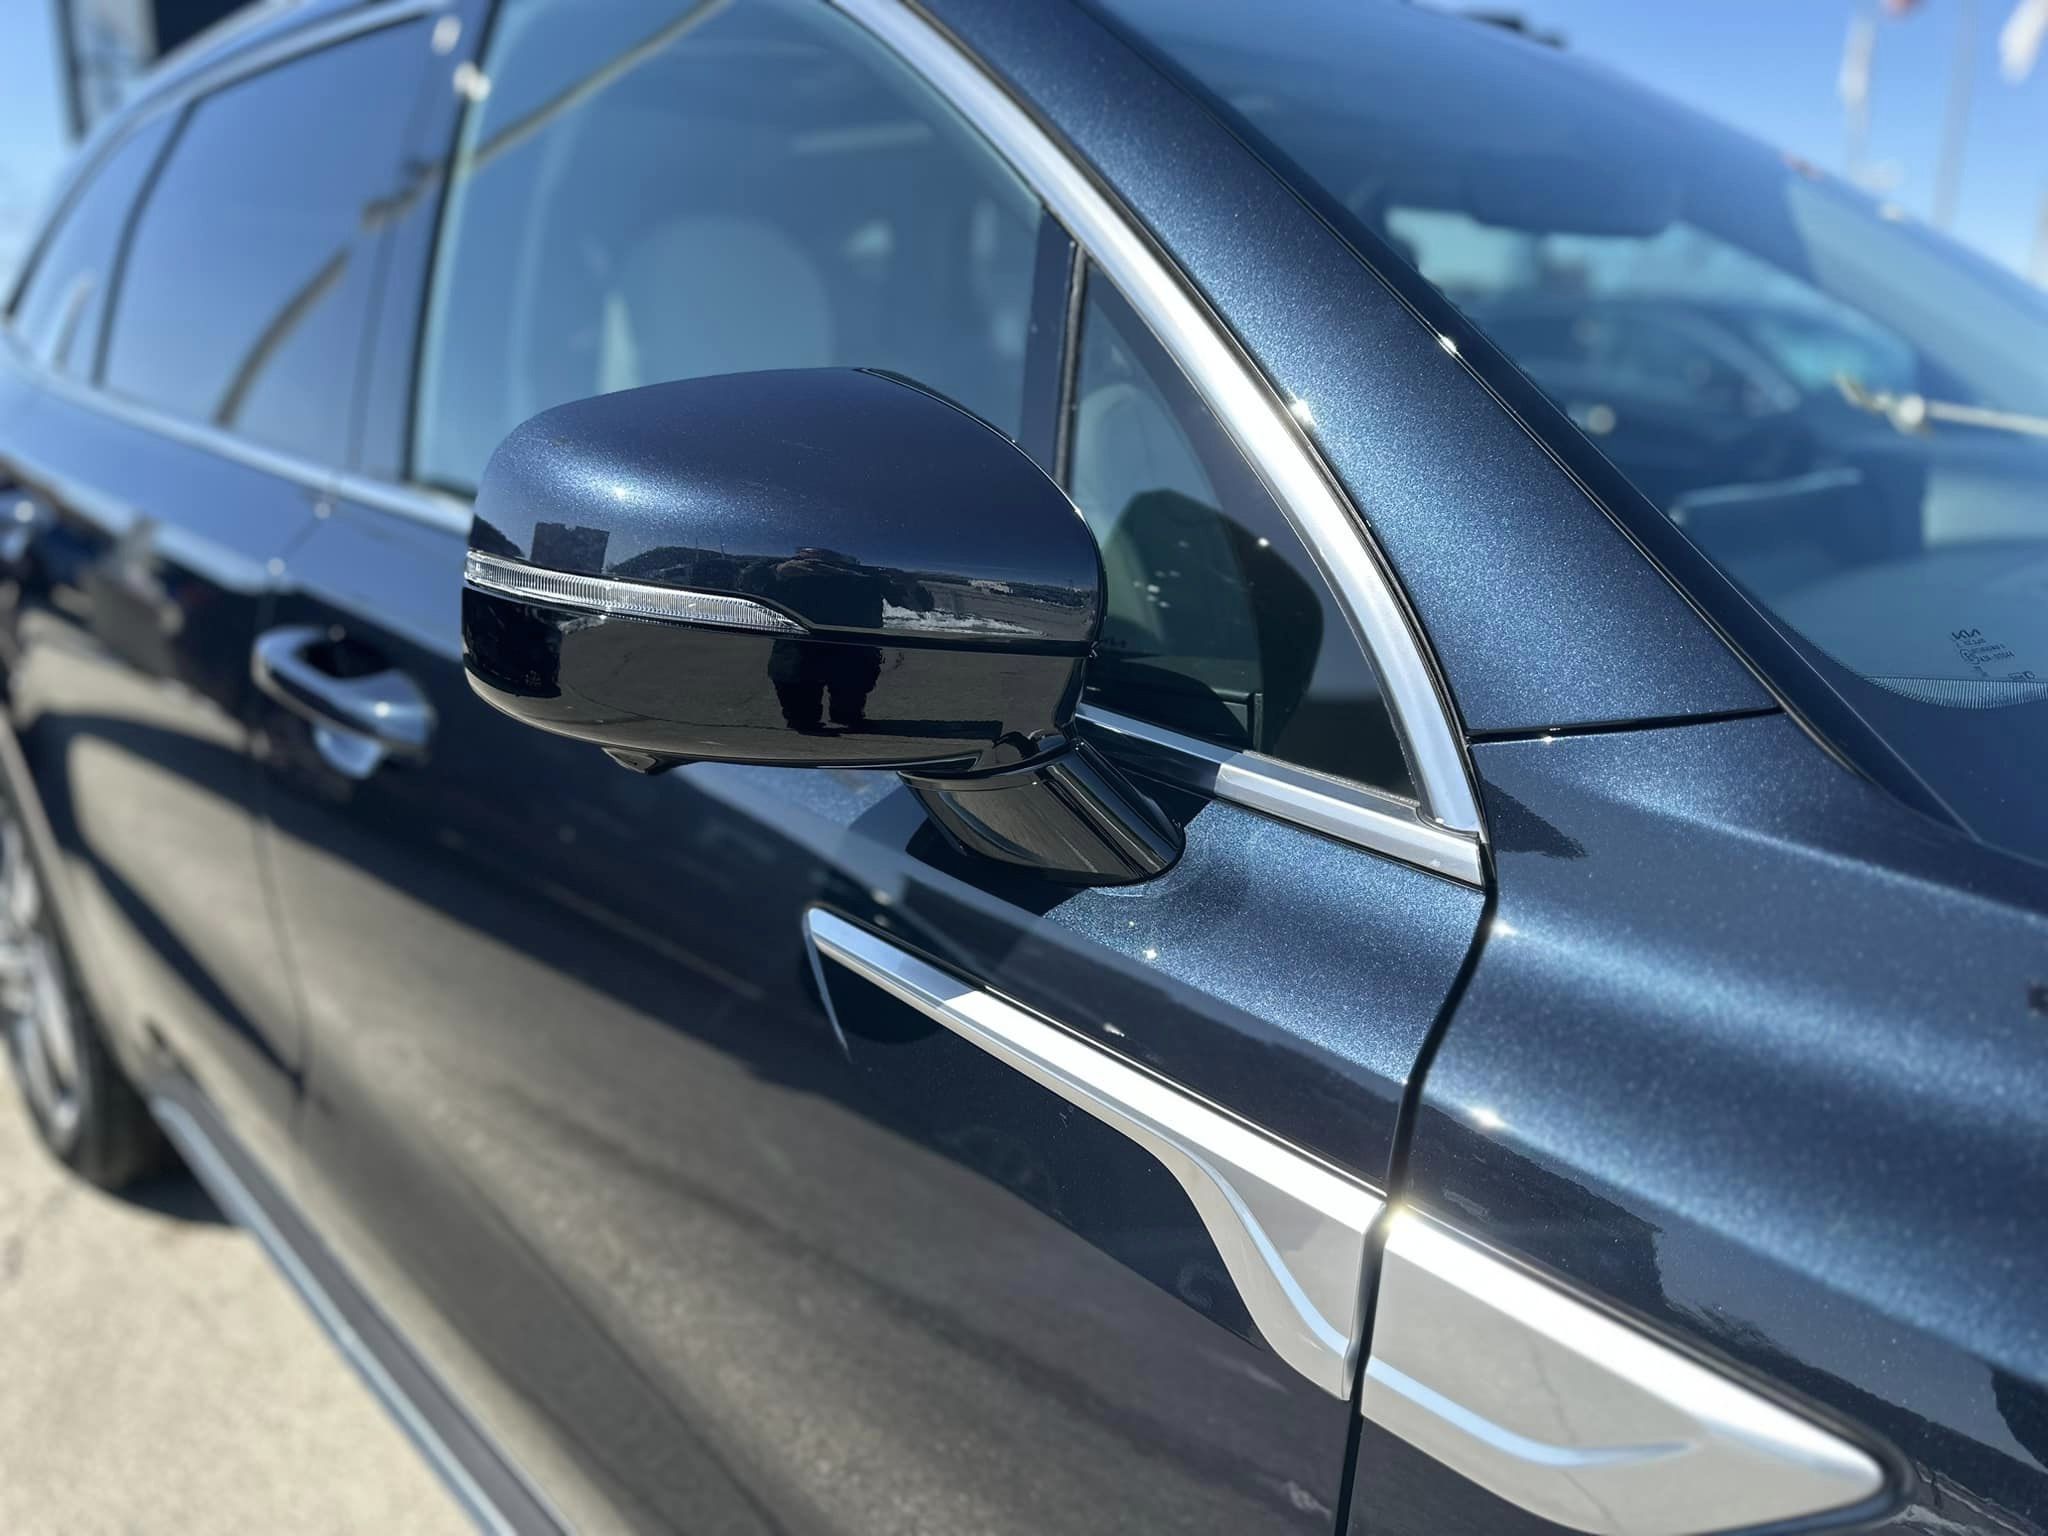 2023 Kia Sportage - Gravity Blue - HEV Hybrid SX Prestige Trim - Side View Mirror